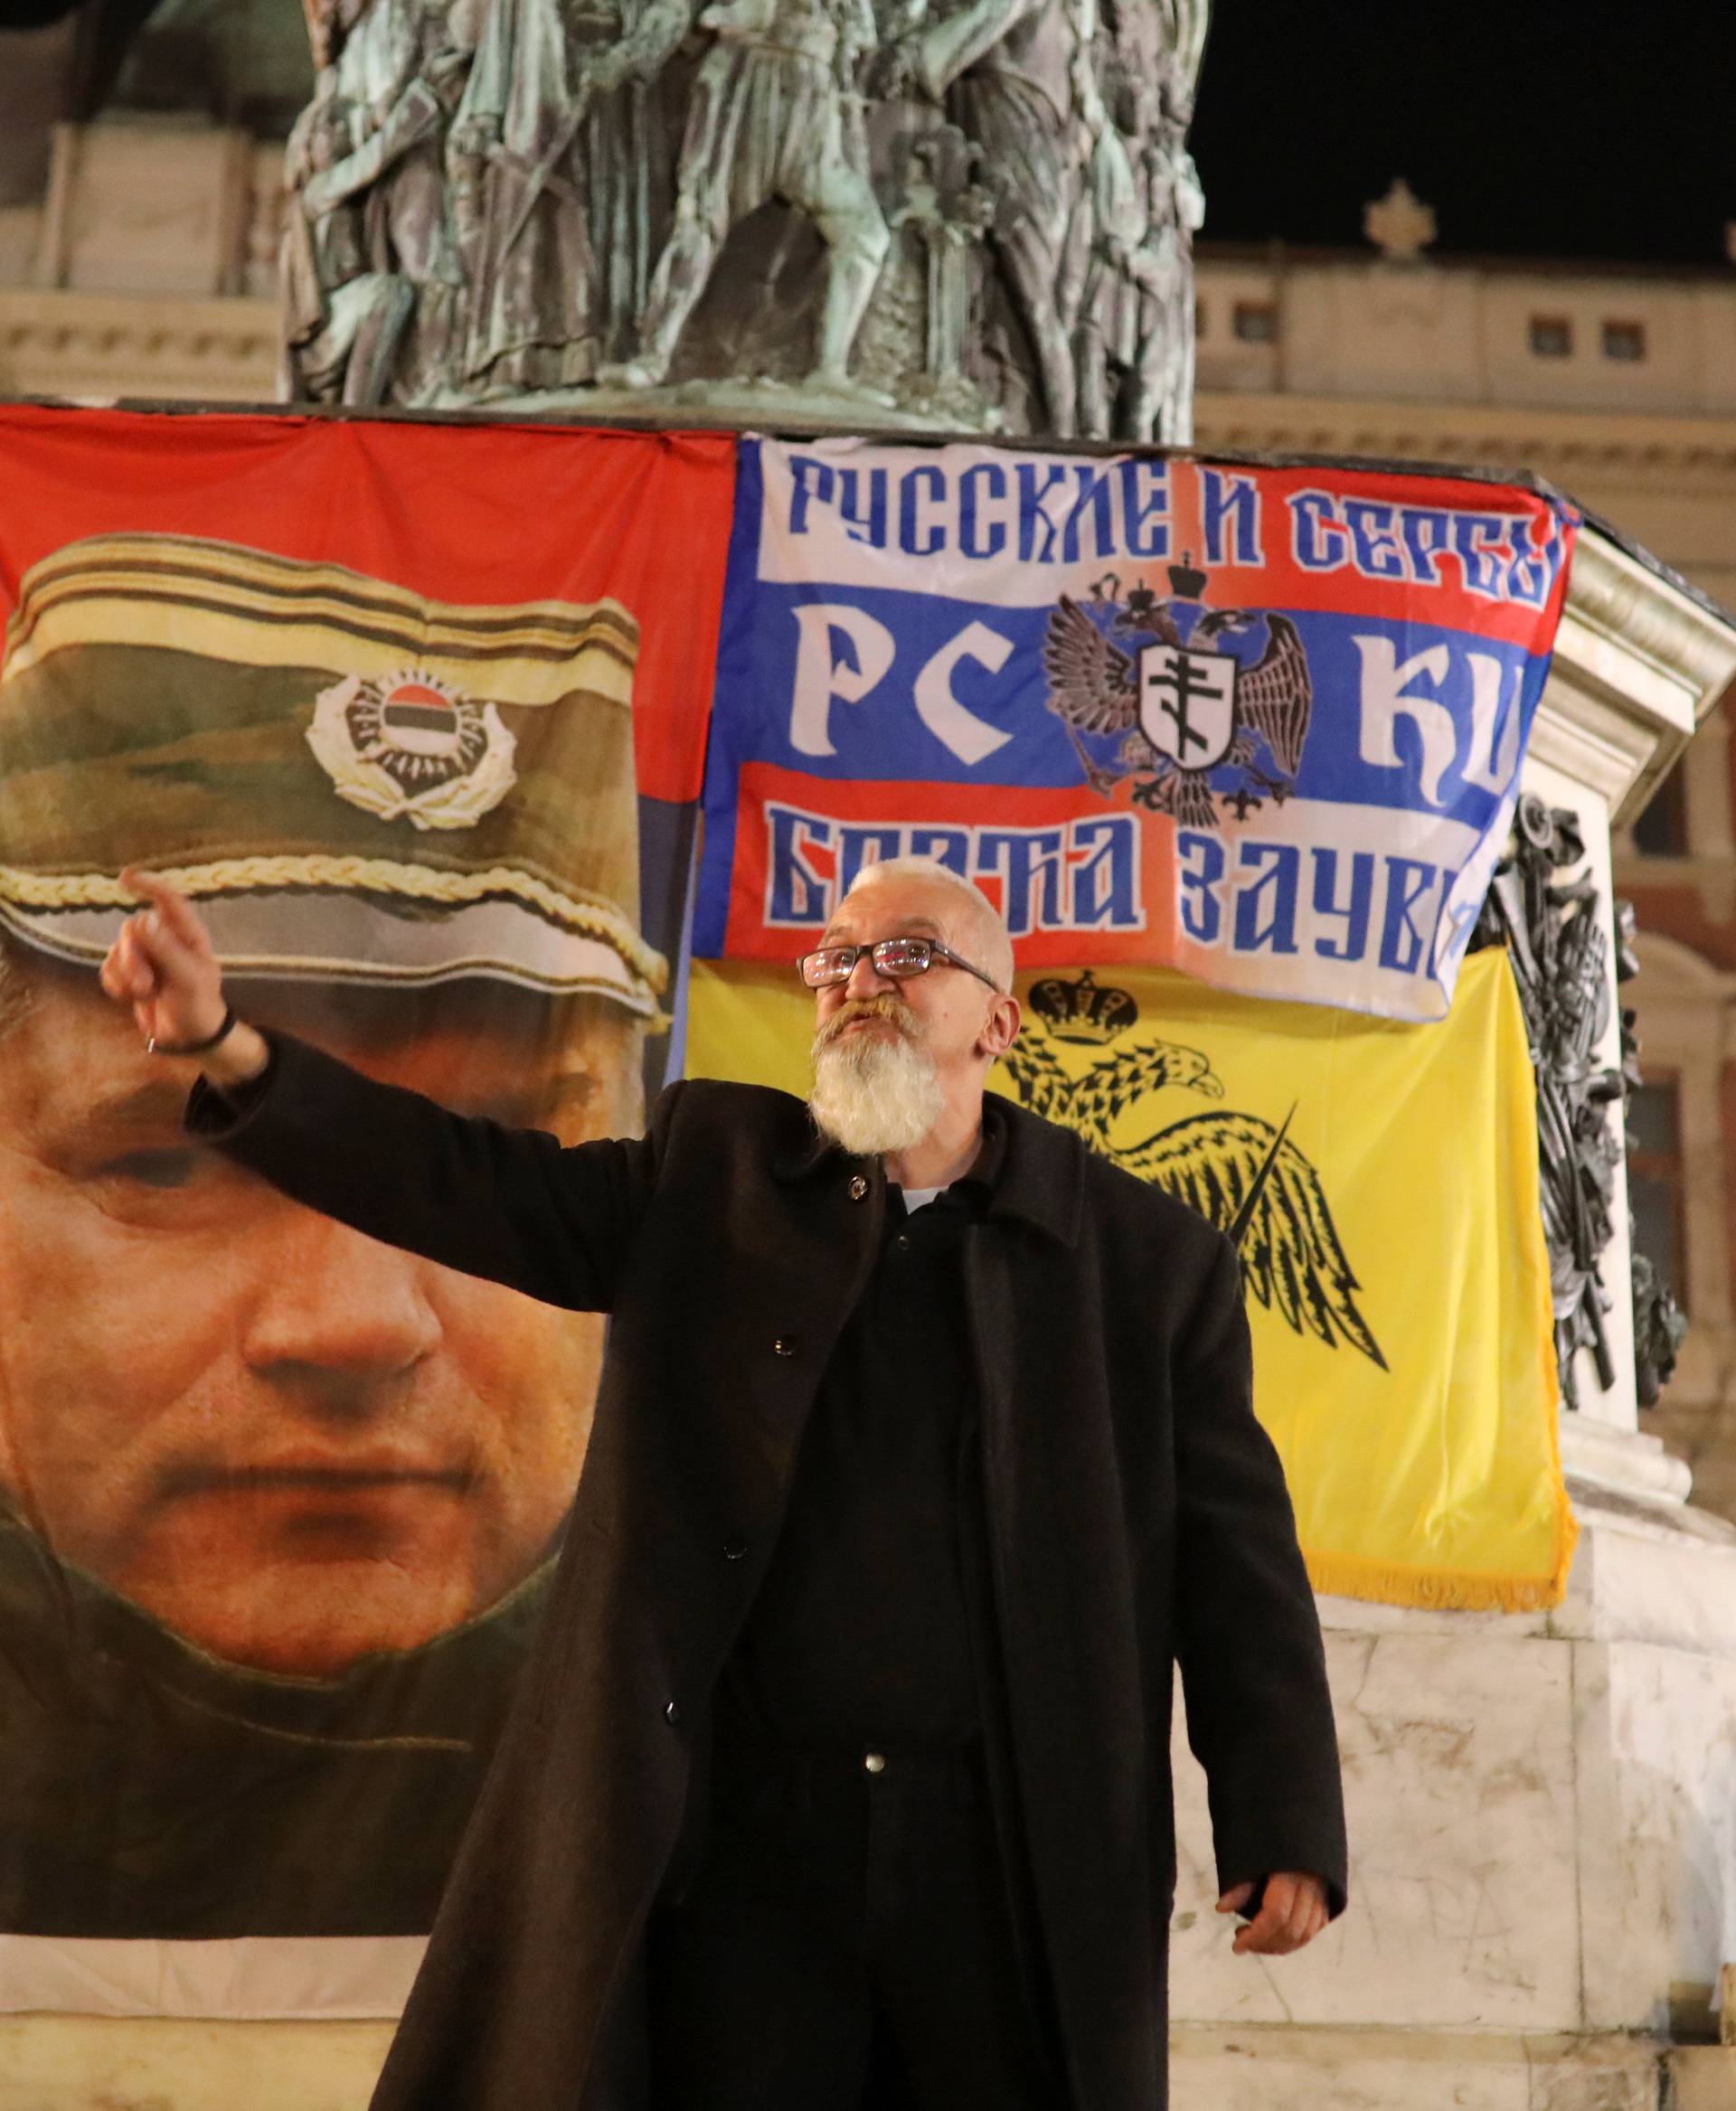 A supporter of former Bosnian Serb general Ratko Mladic shouts slogans during a protest against the verdict of the U.N. Criminal Tribunal for the Former Yugoslavia, in Belgrade